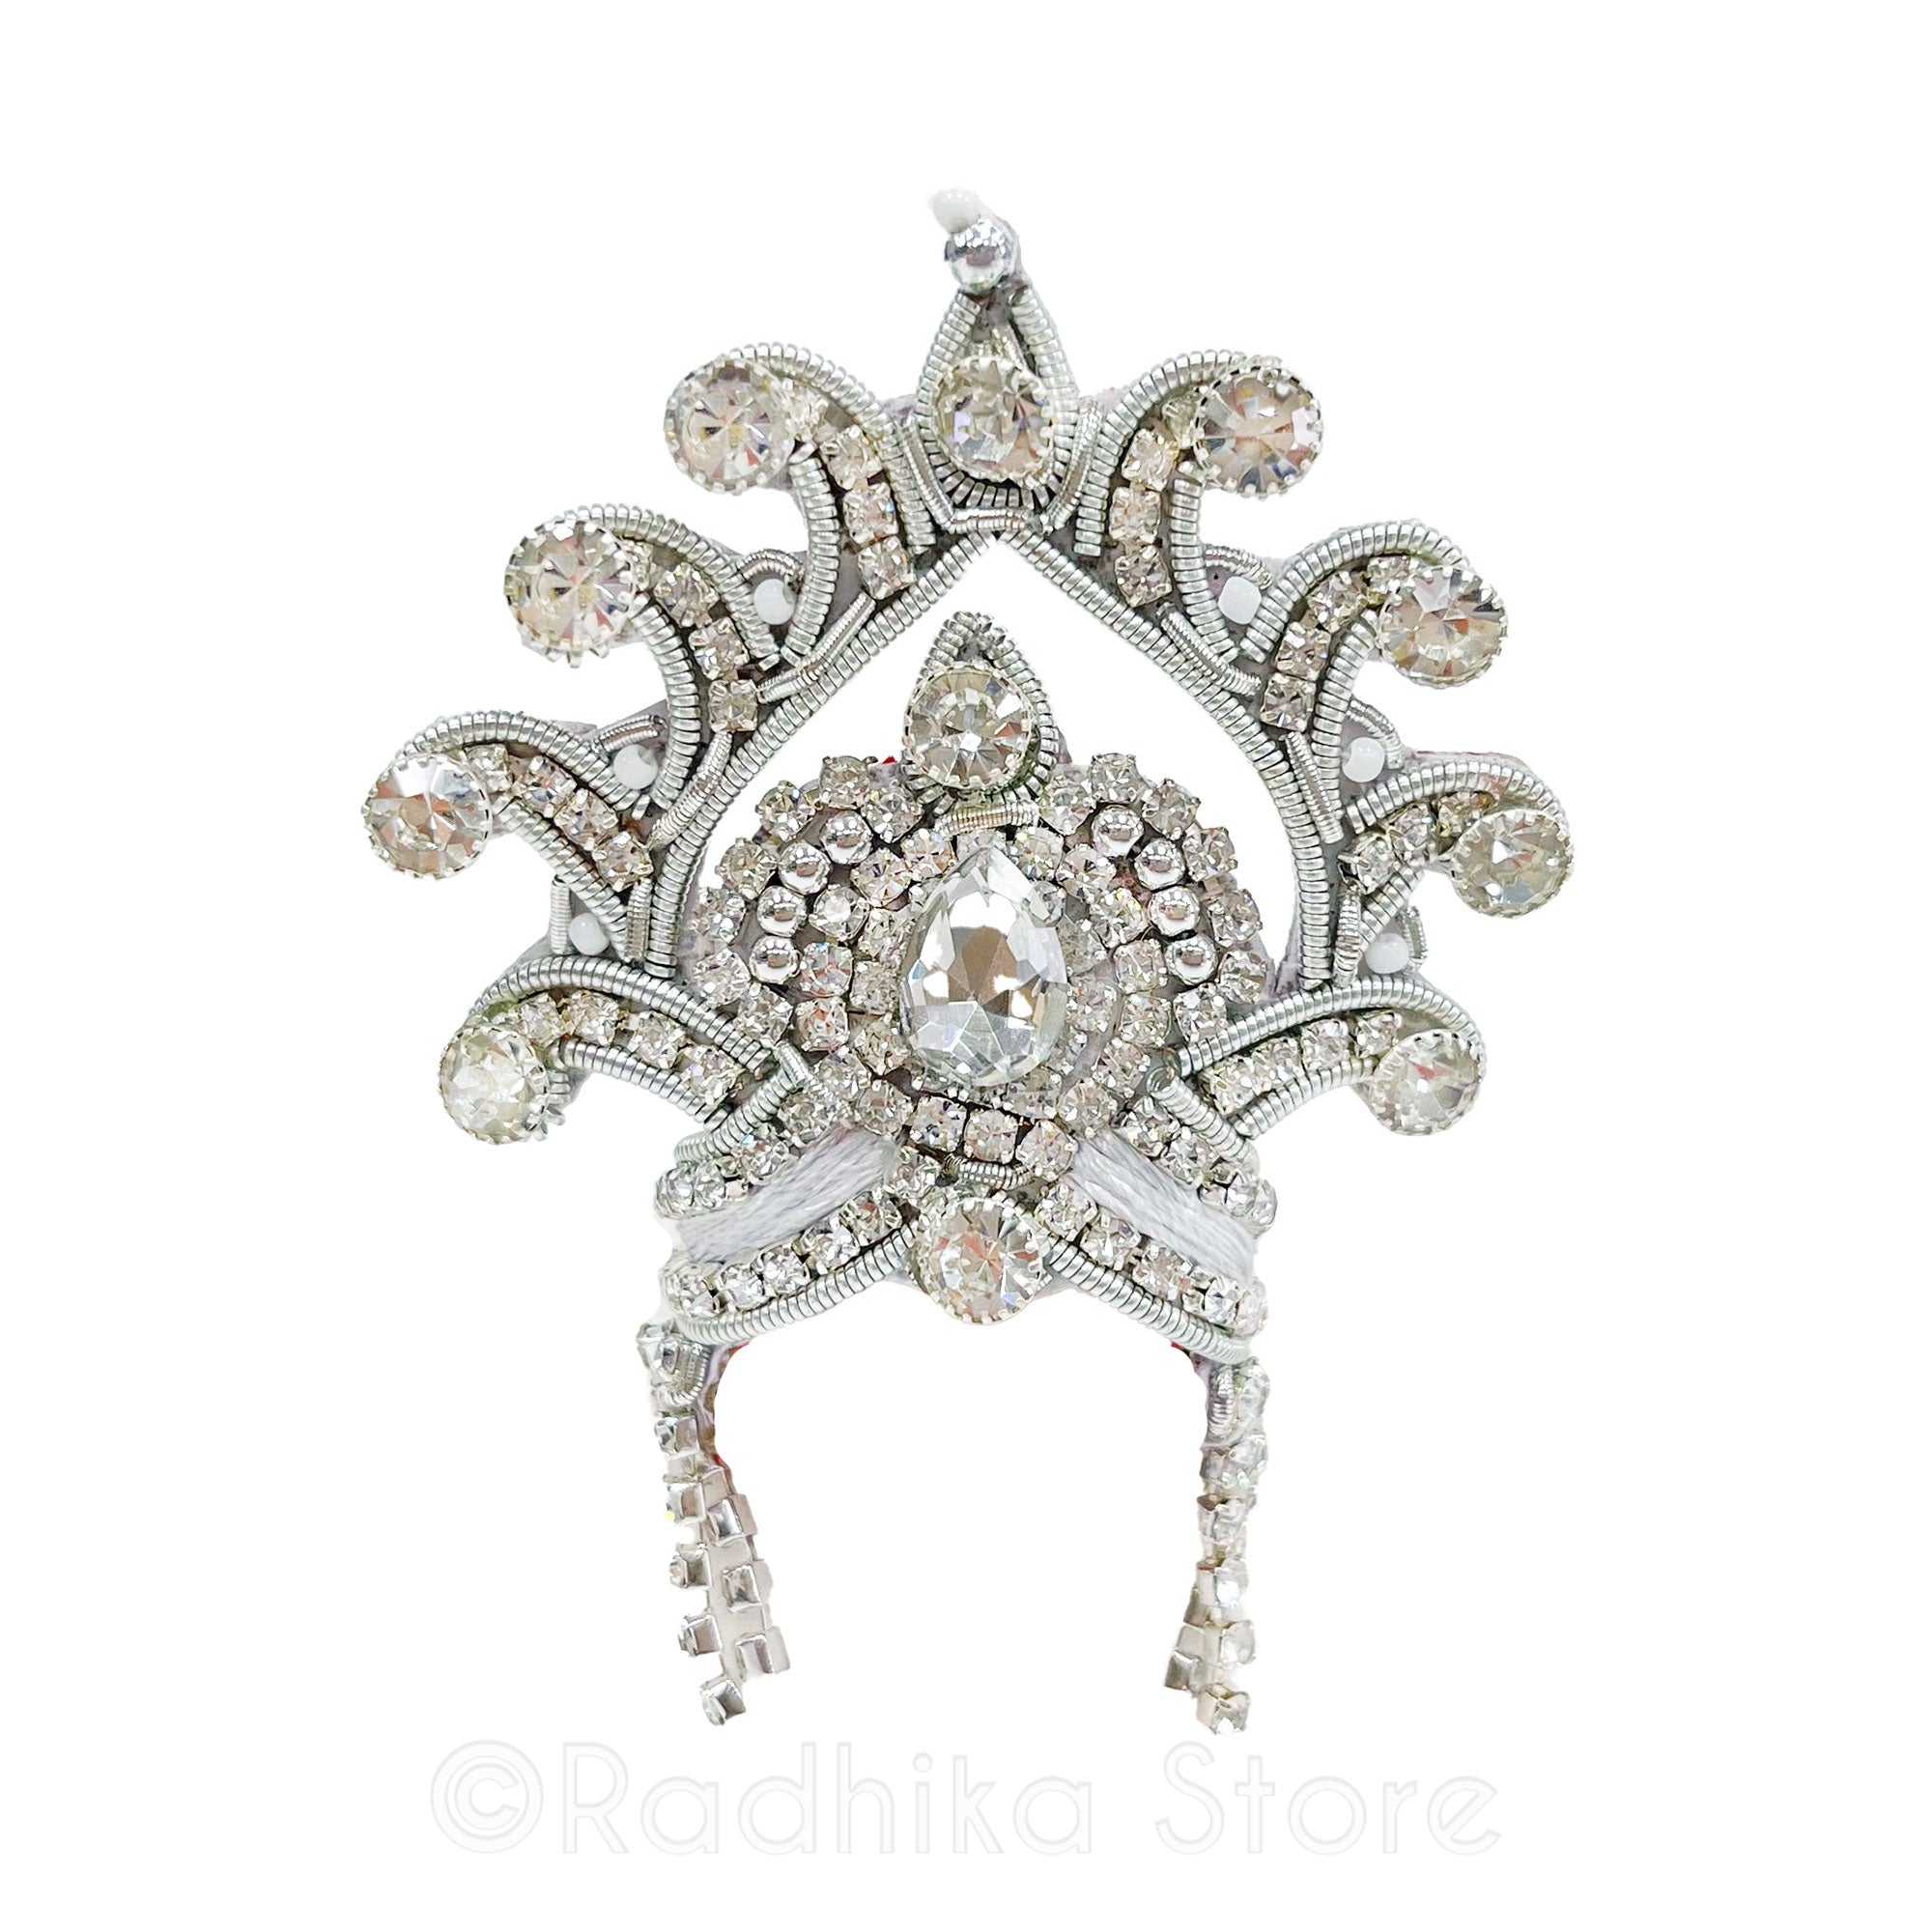 Silver Flame Effulgence - Deity Crown